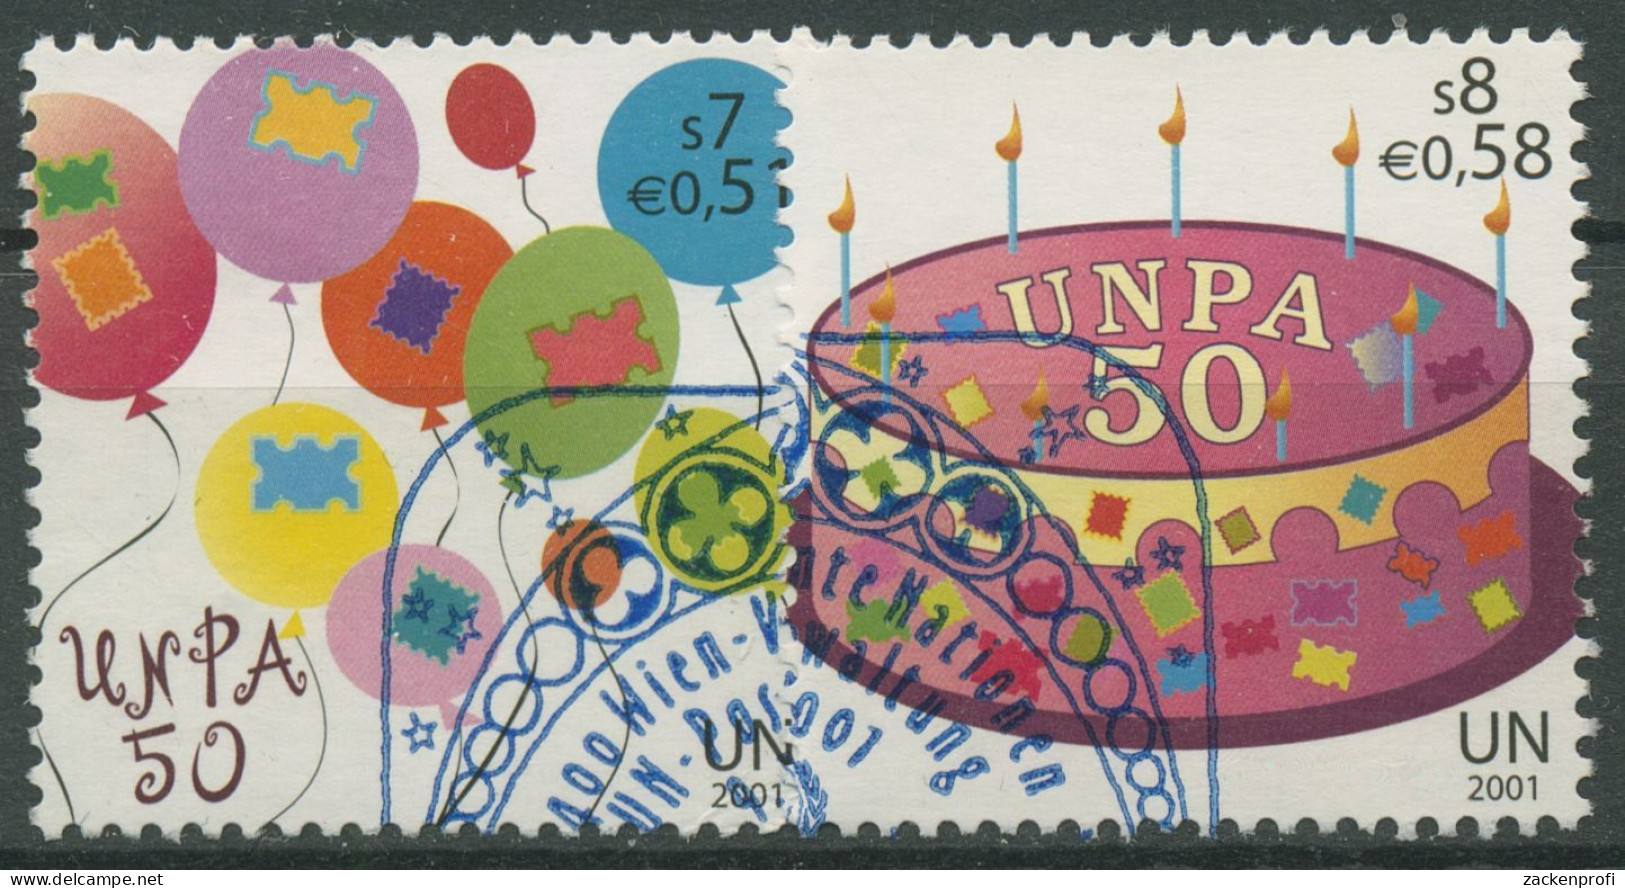 UNO Wien 2001 UN-Postverwaltung Geburtstagsgrüße 342/43 Gestempelt - Used Stamps